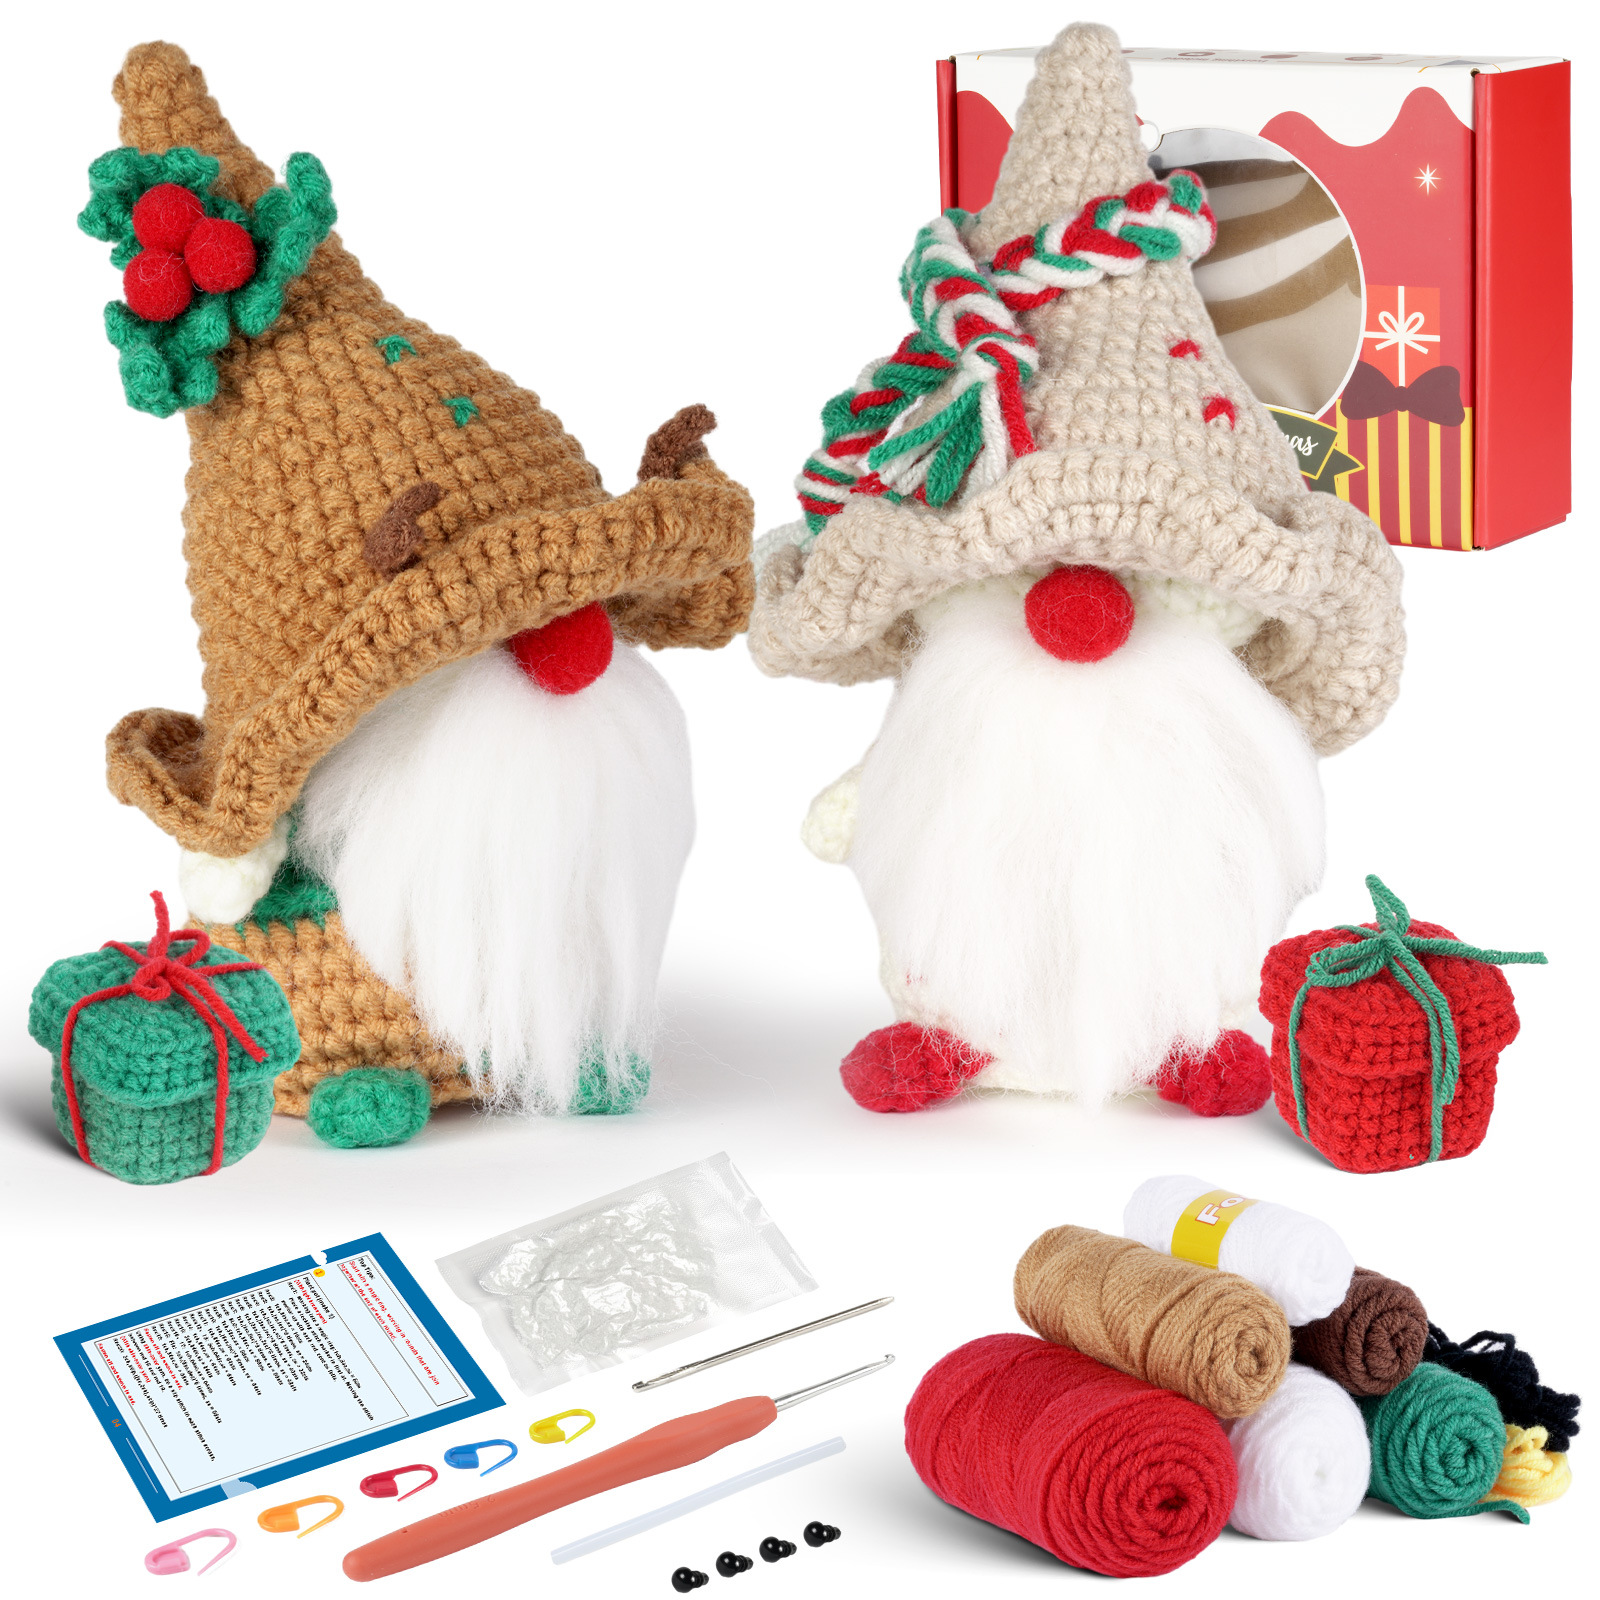  Lyrow 3 Pcs Christmas Crochet Set for Beginners Gnome Beginner  Crochet Set for Adults DIY Knitting Kit with Videos, Yarn, Crochet Hook  Accessories, Multicolor, Gift for Crochet Lovers